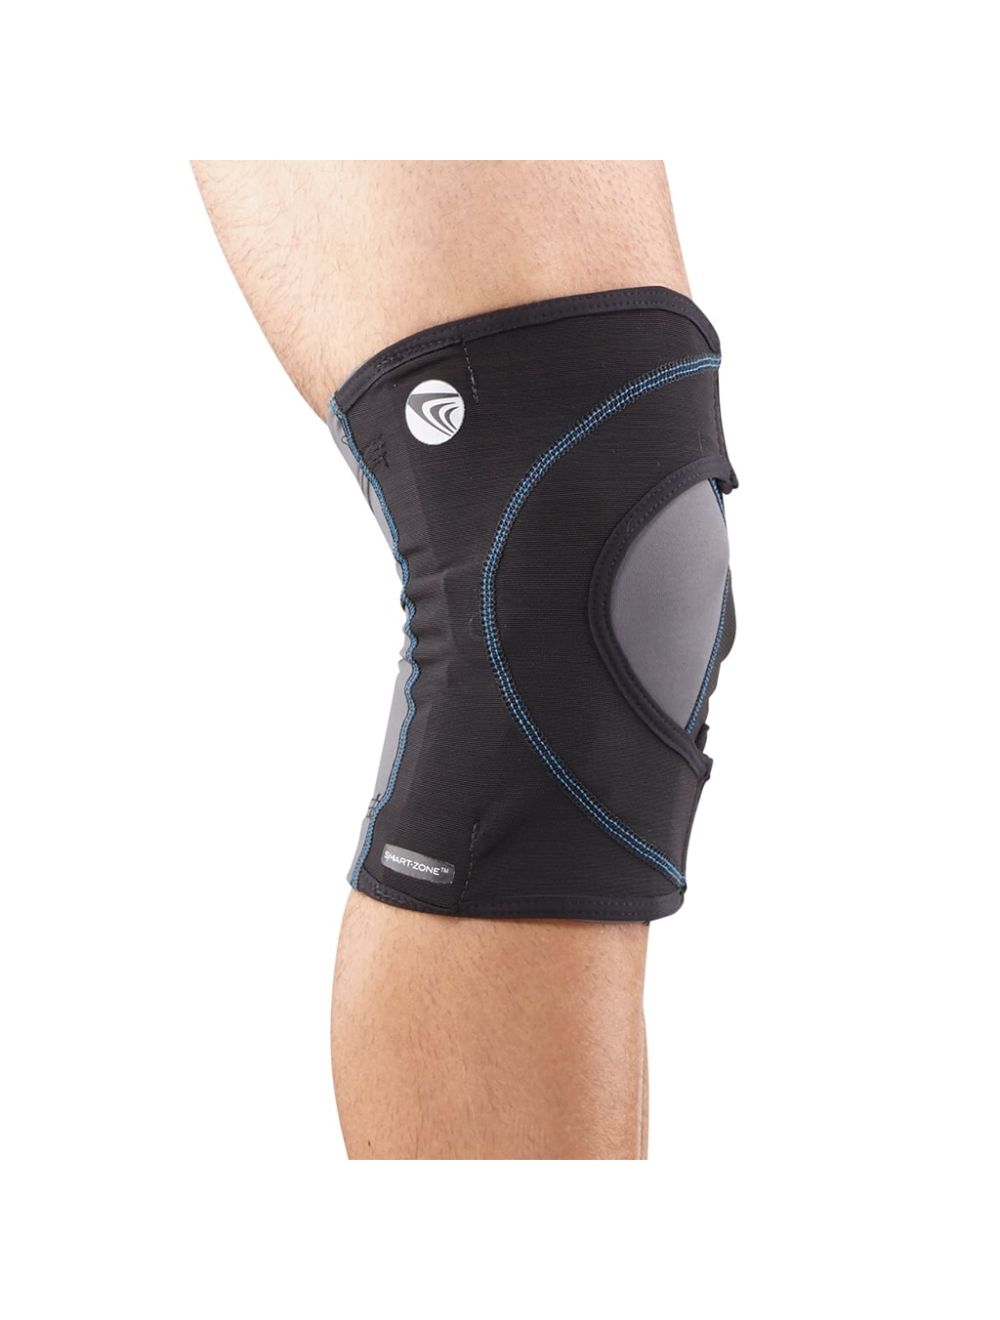 https://www.usawheelchair.com/pub/media/catalog/product/cache/ddb236bdd69ff7cc1401d94c525e1745/k/n/knee-bracing-breg-freesport-knee-brace-1.jpg